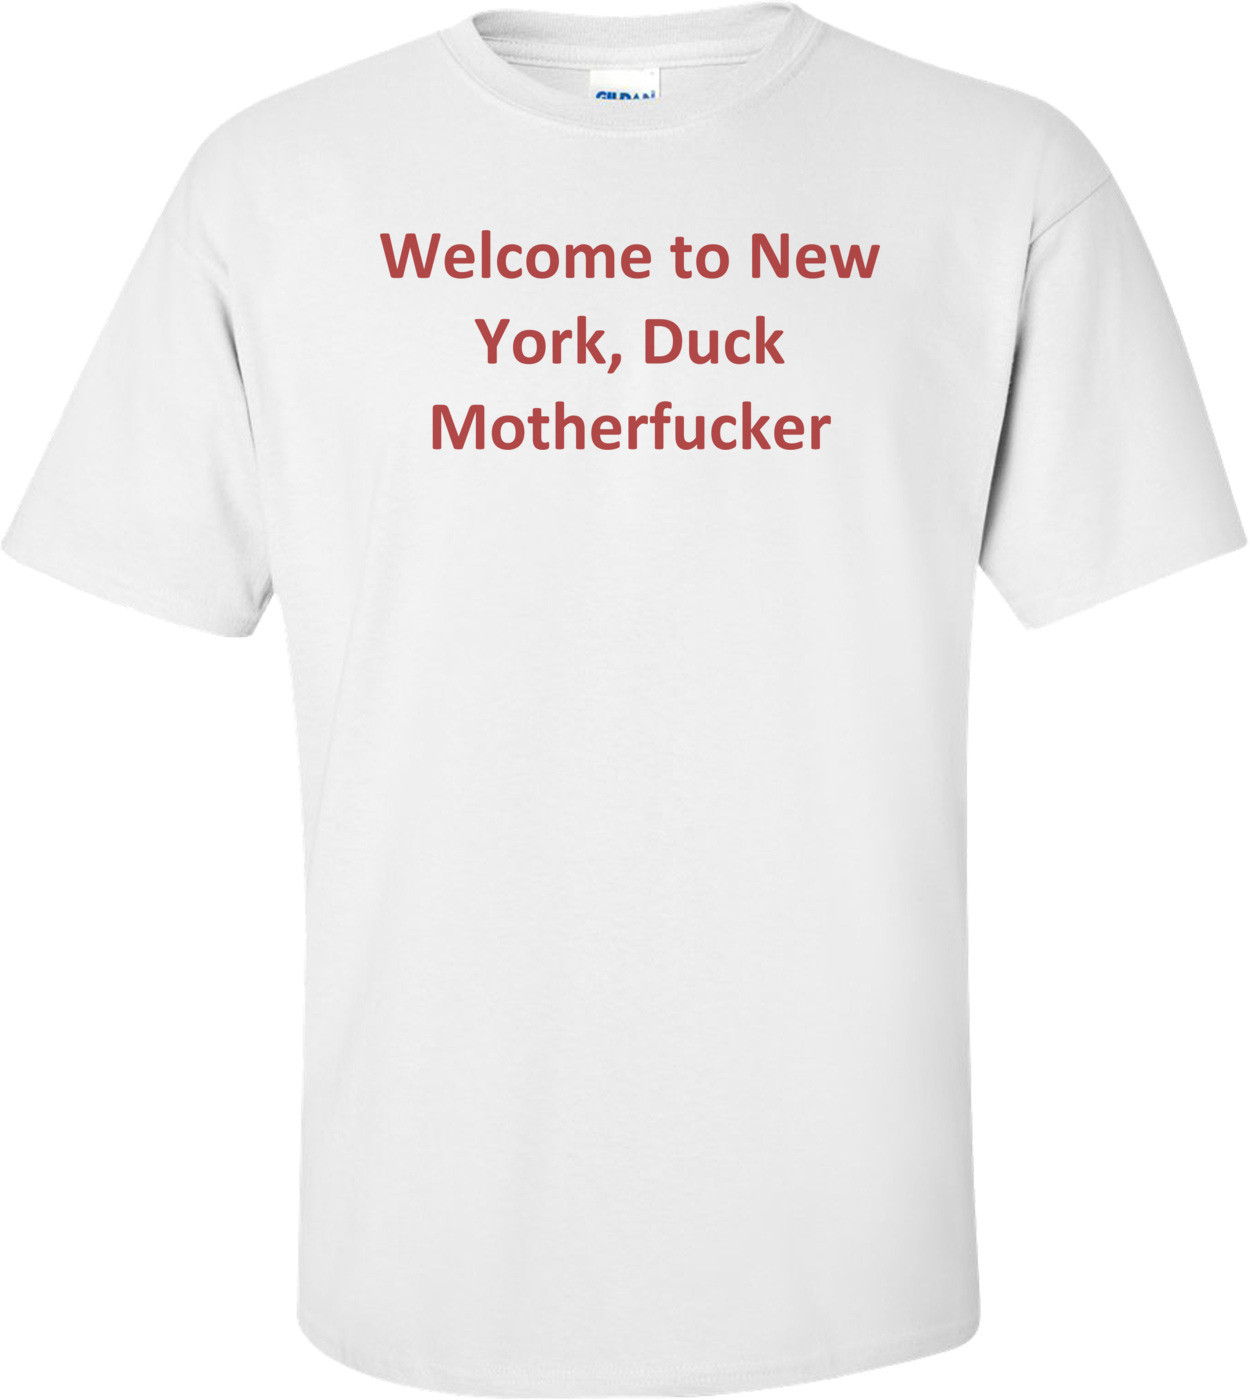 Welcome to New York, Duck Motherfucker Shirt